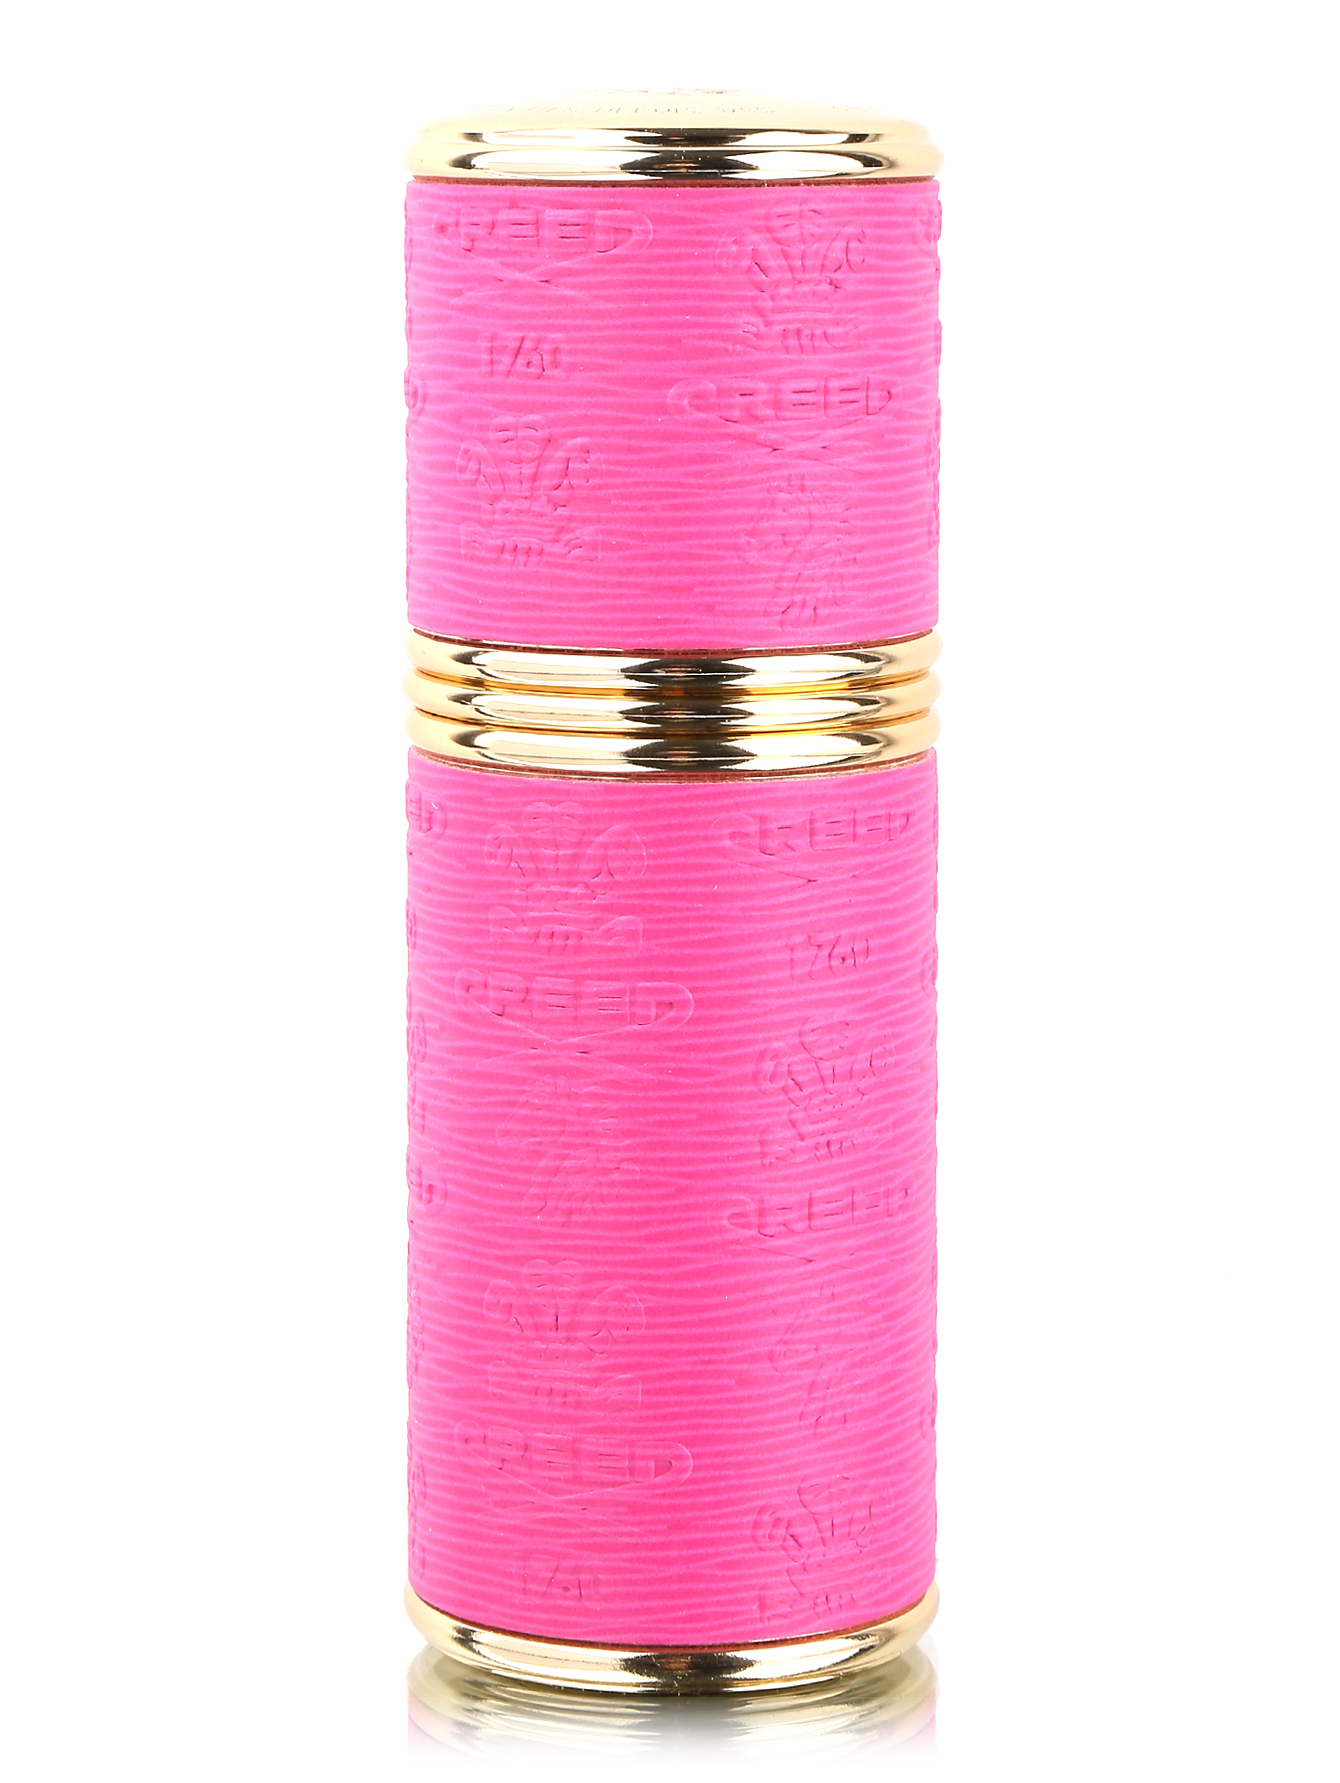 Дорожный футляр 50мл Gold/Pink Neon Accessories - Общий вид